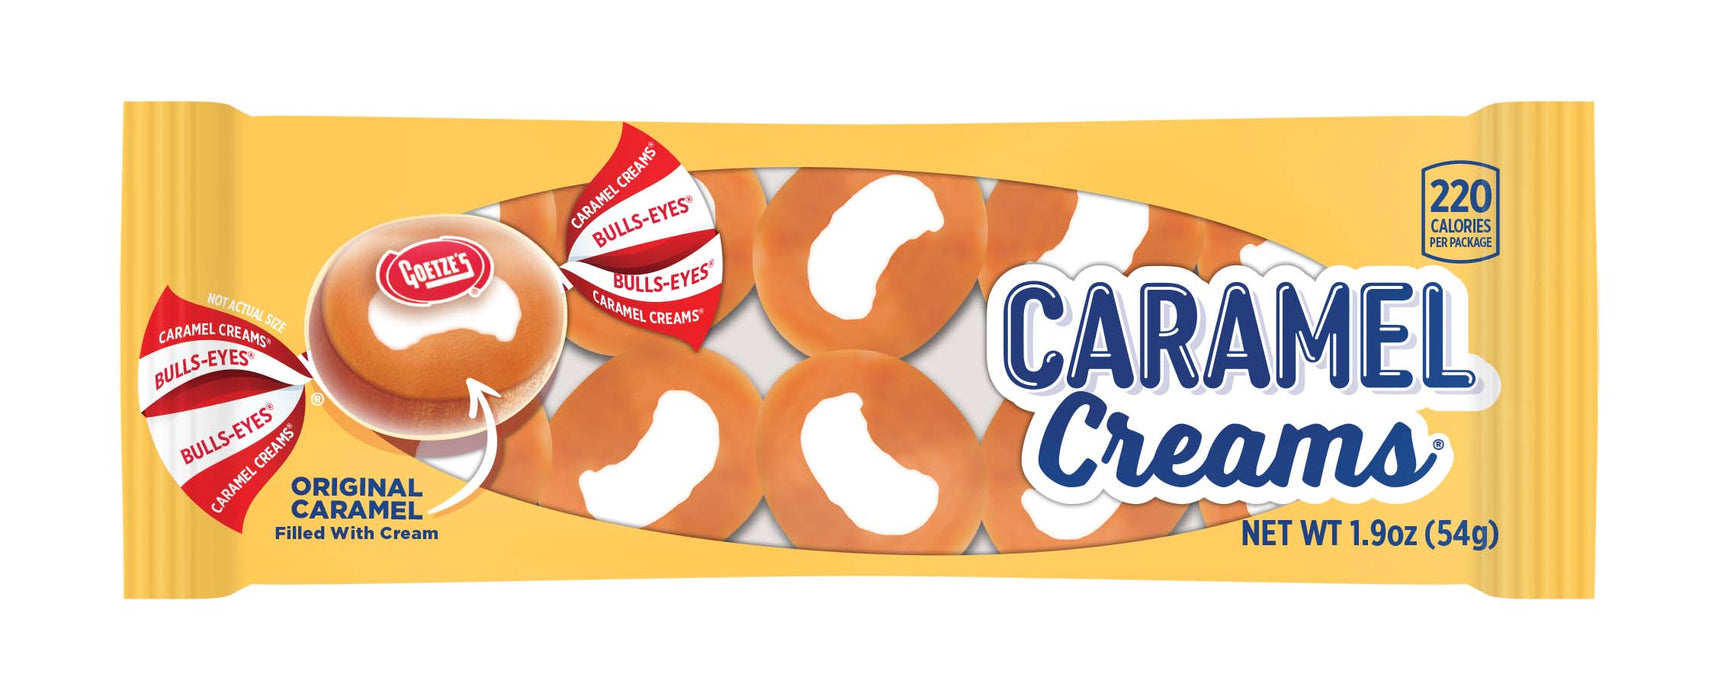 Goetze Caramel Creams 1.9oz tray pack